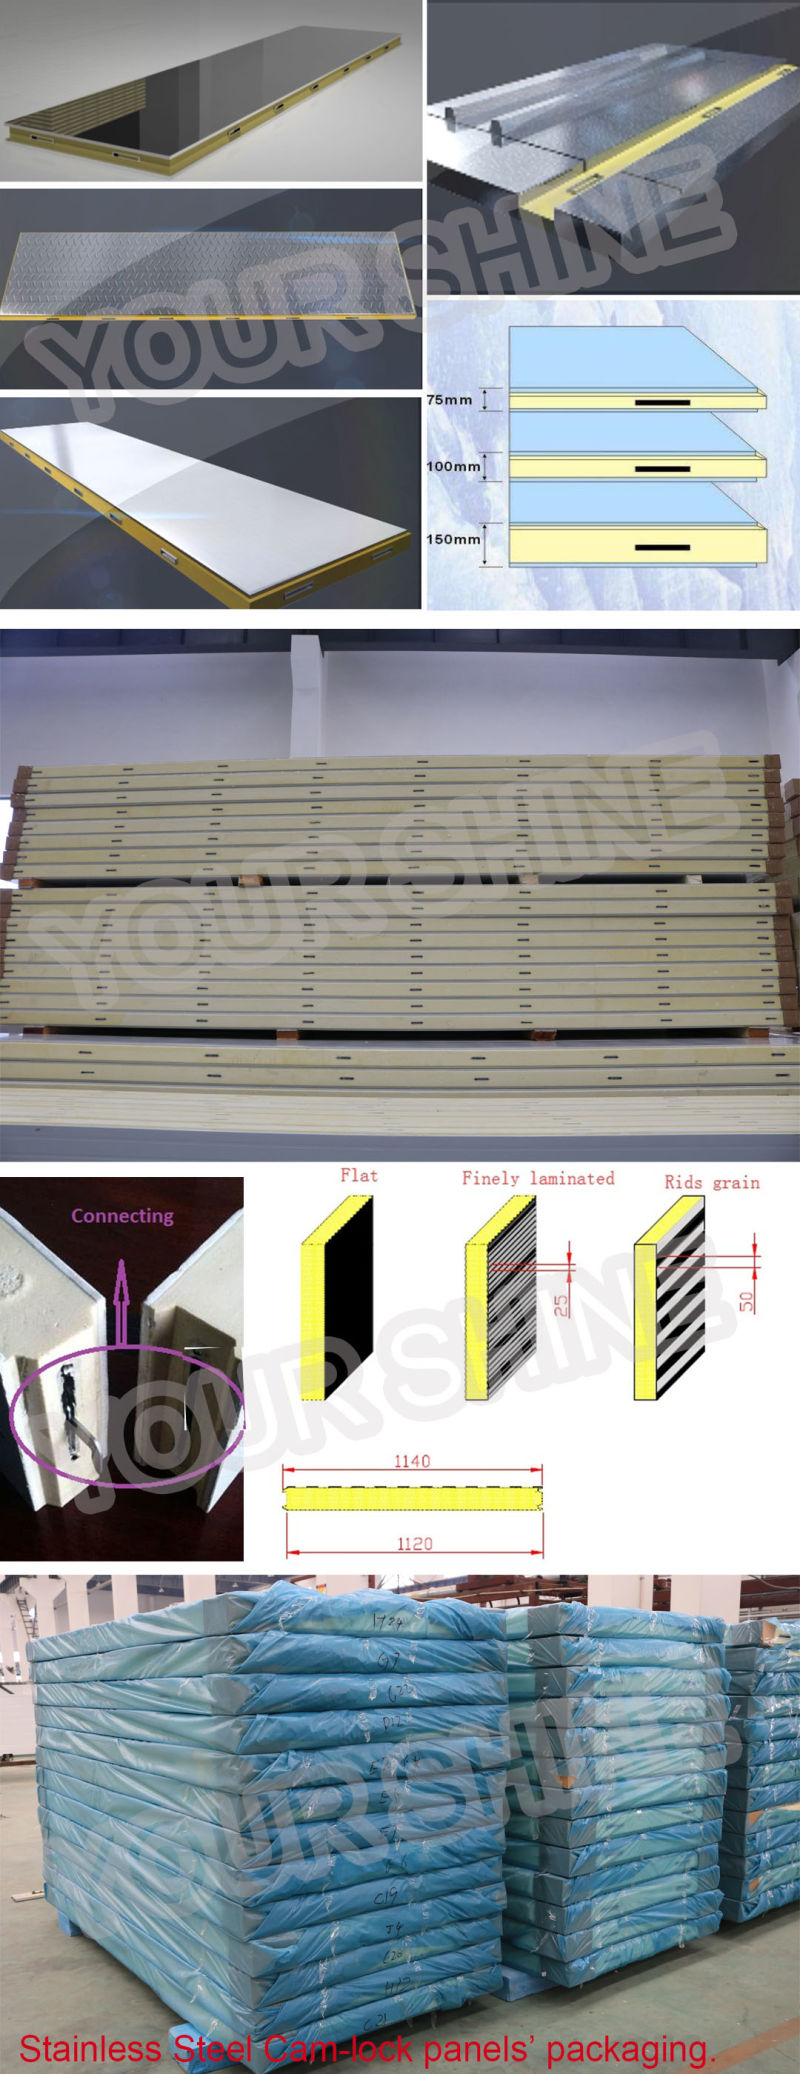 Top Quality Fireproof Aluminum Polyurethane Foam PU Insulated Sandwich Panel